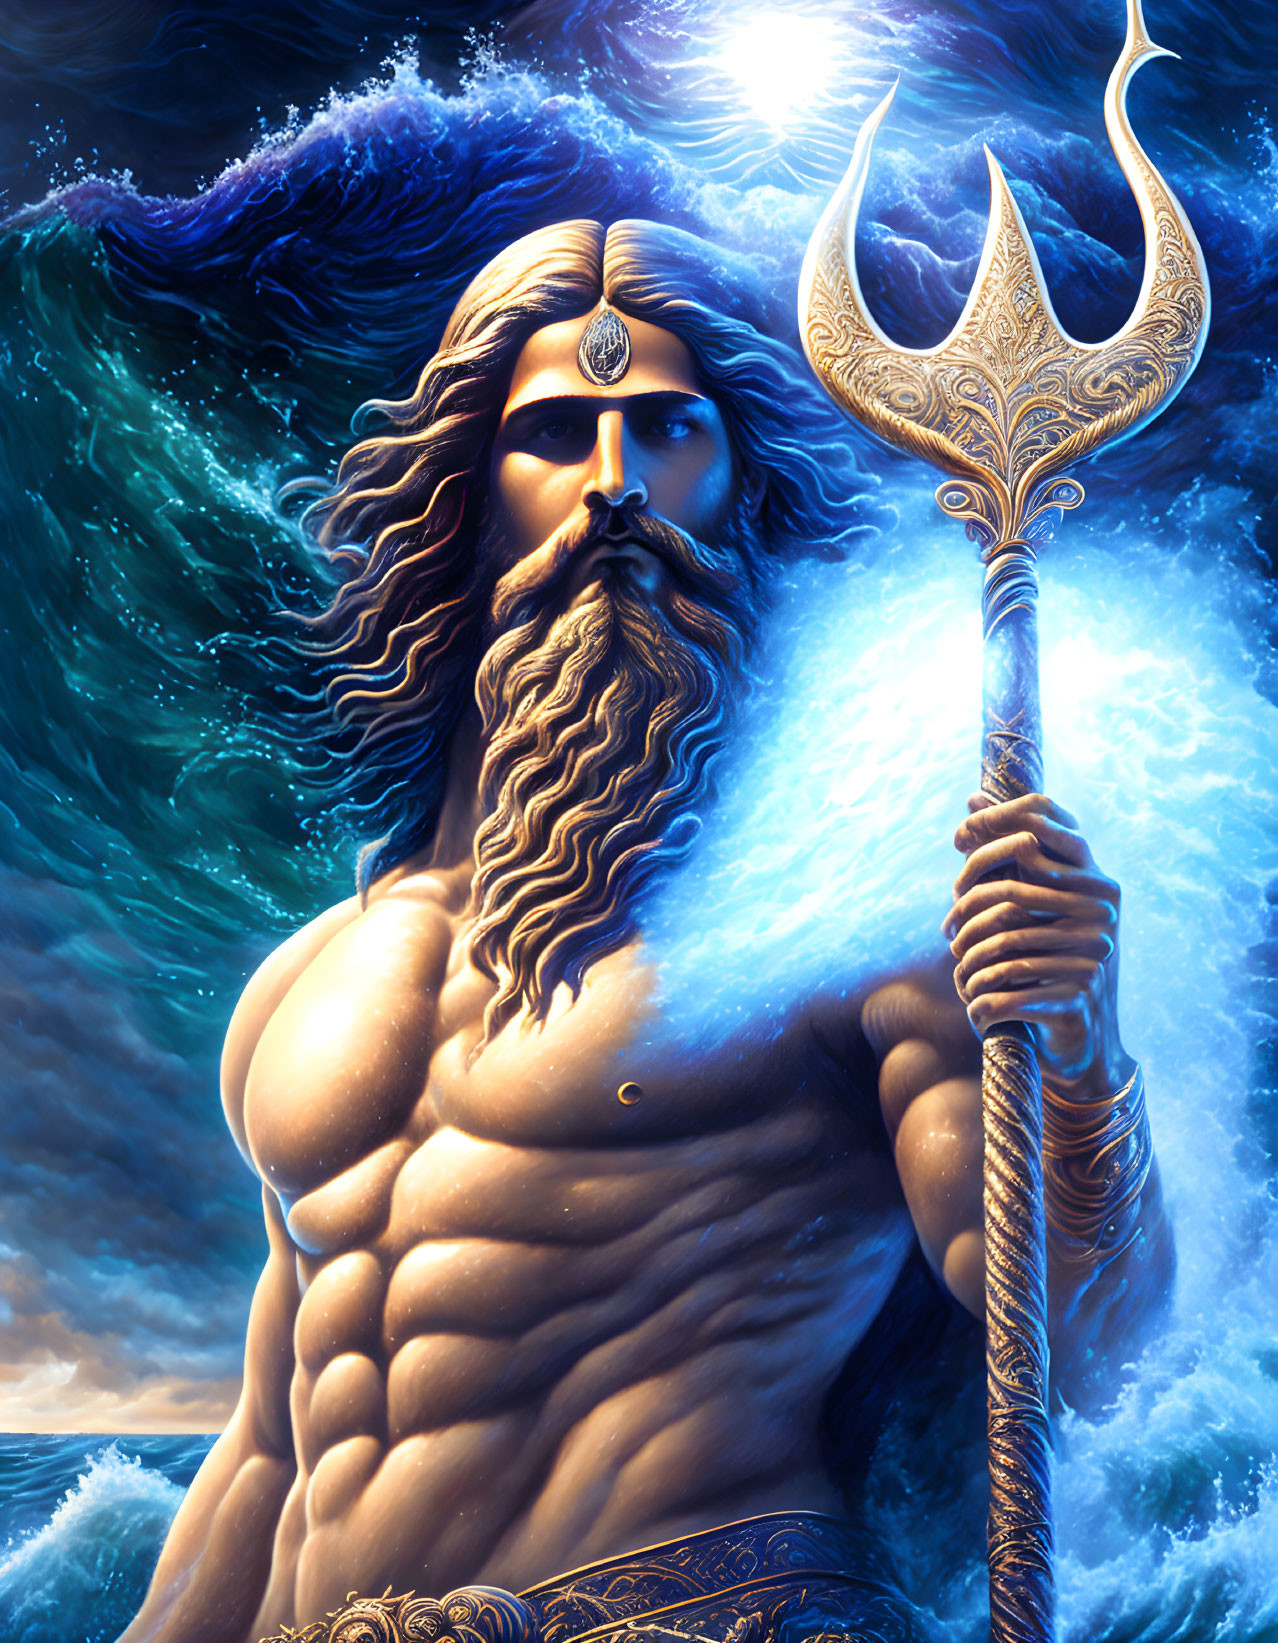 Poseidon - Lord of the seas